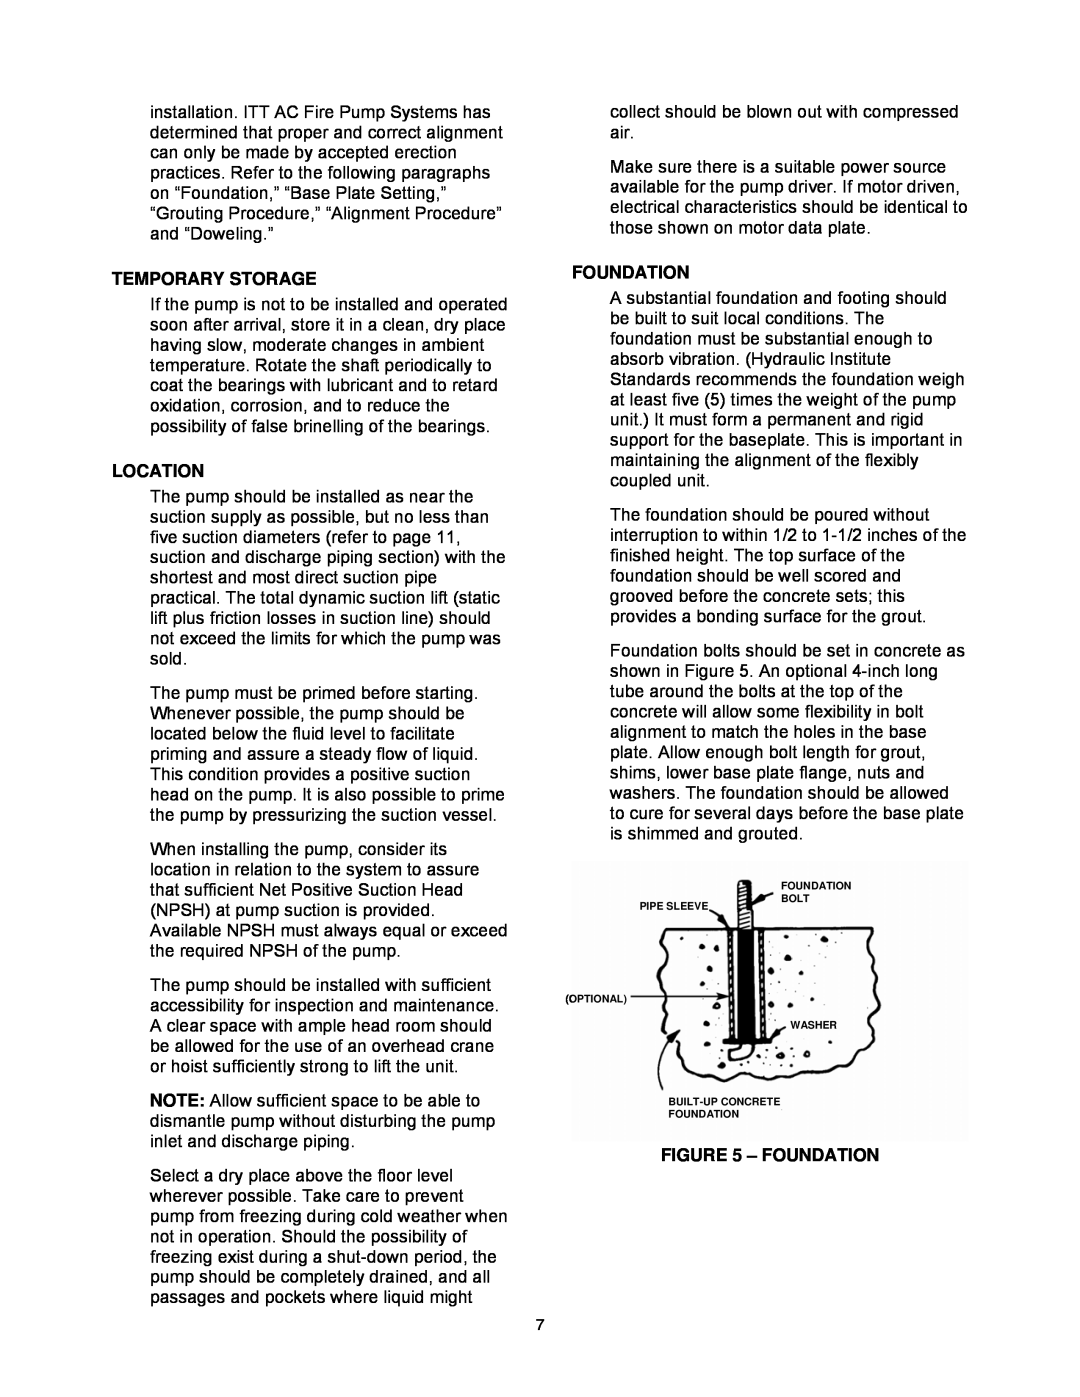 AC International 8200 Series instruction manual Temporary Storage, Location, Foundation 